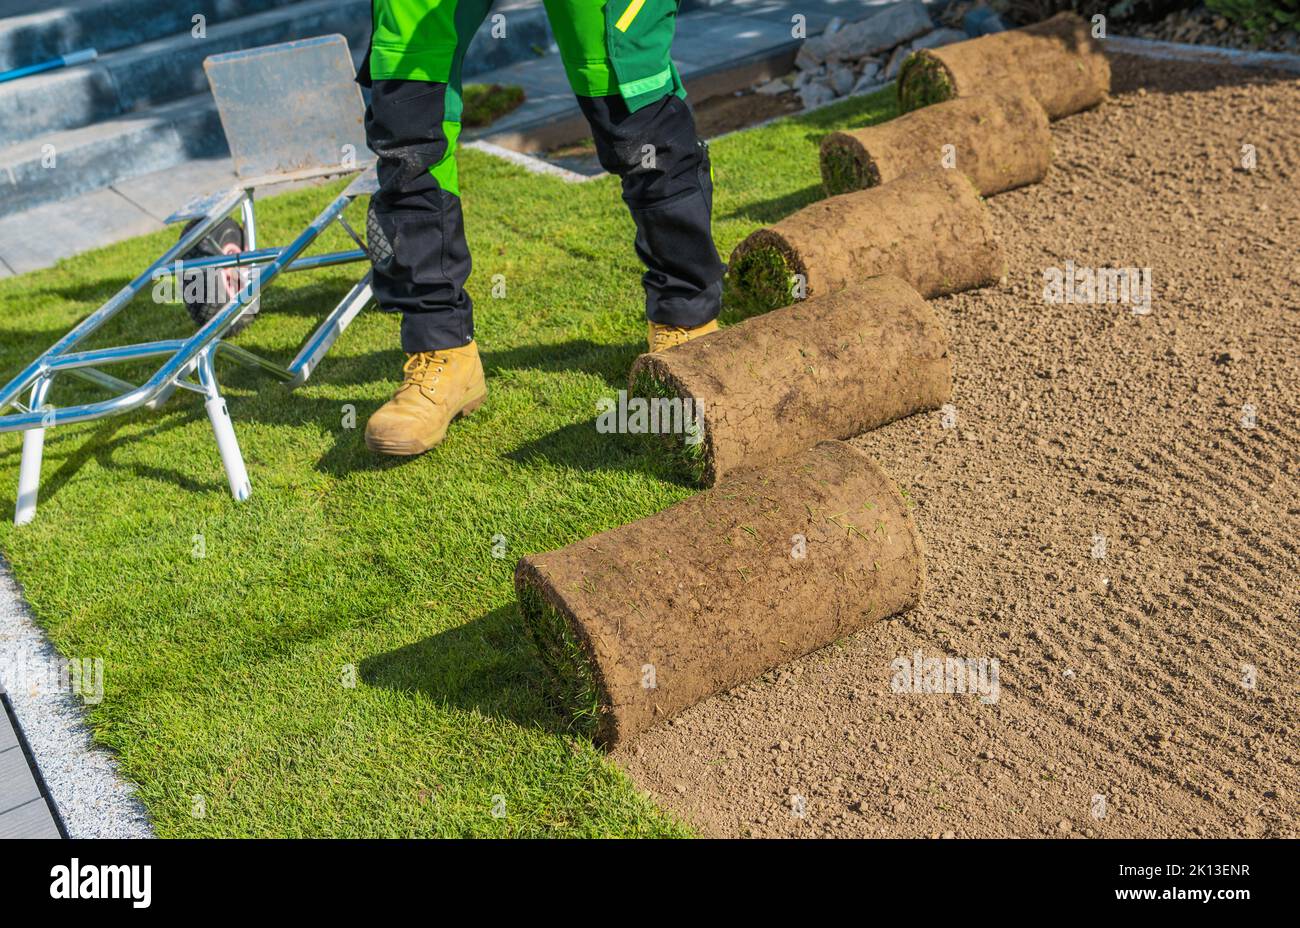 Building New Natural Grass Turfs Lawn. Professional Landscaper Installing Fresh Turfs. Stock Photo